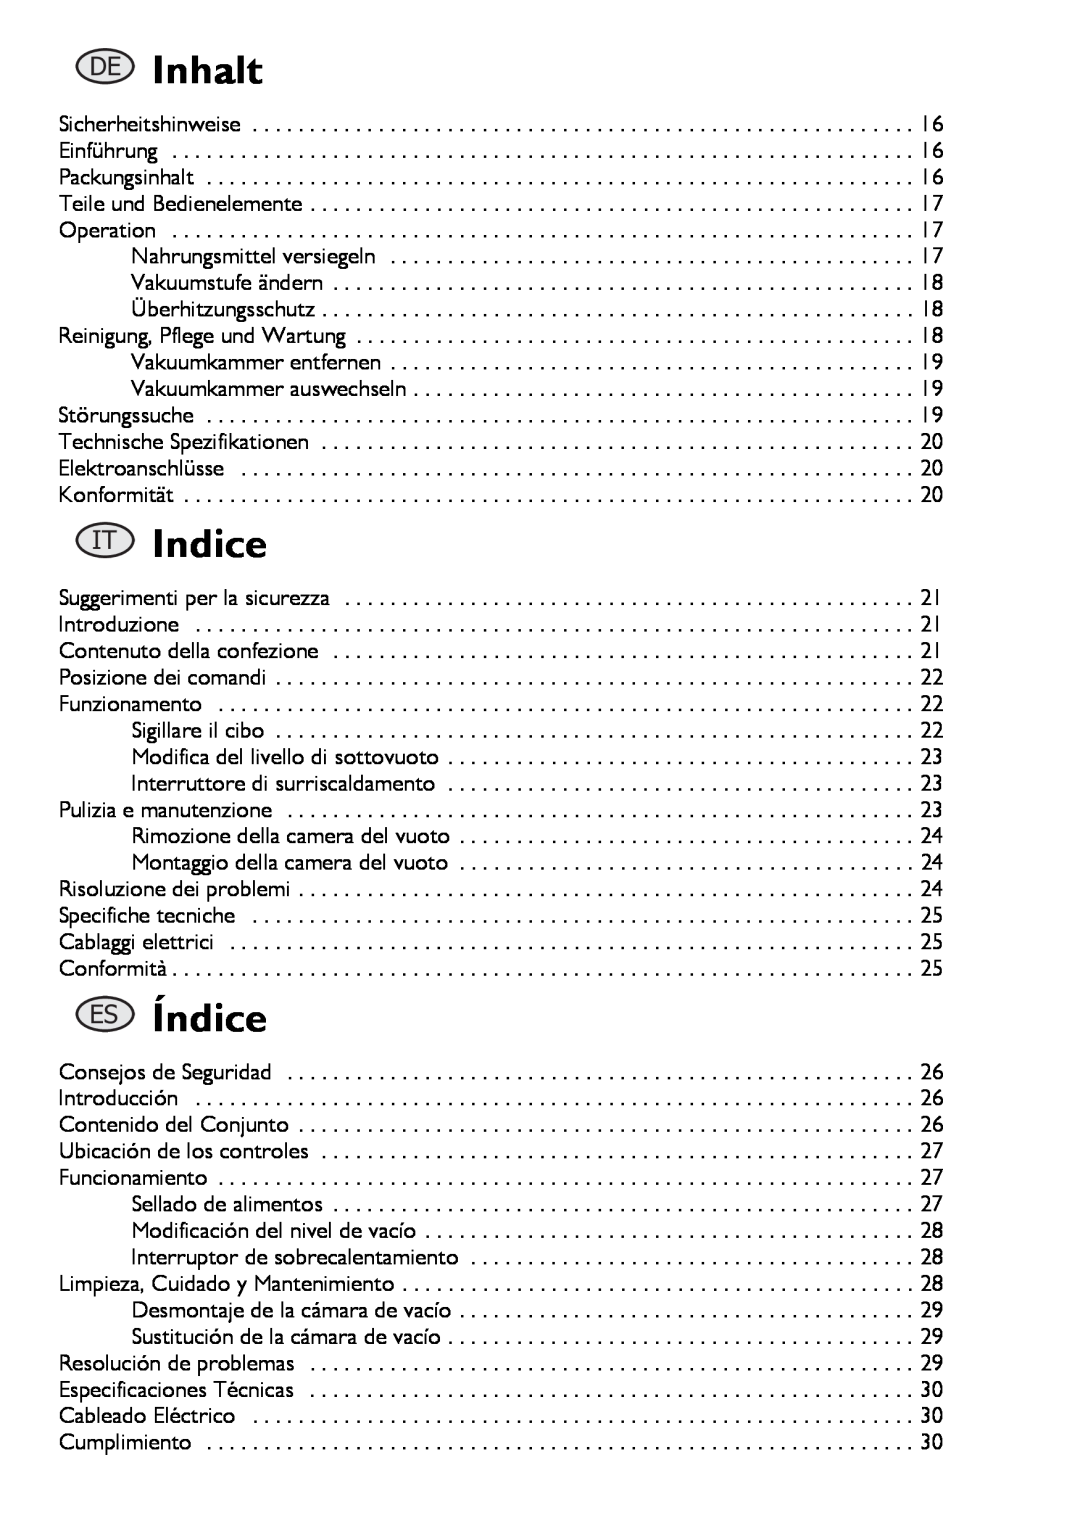 Buffalo Tools S097 instruction manual Inhalt, Indice, Índice 